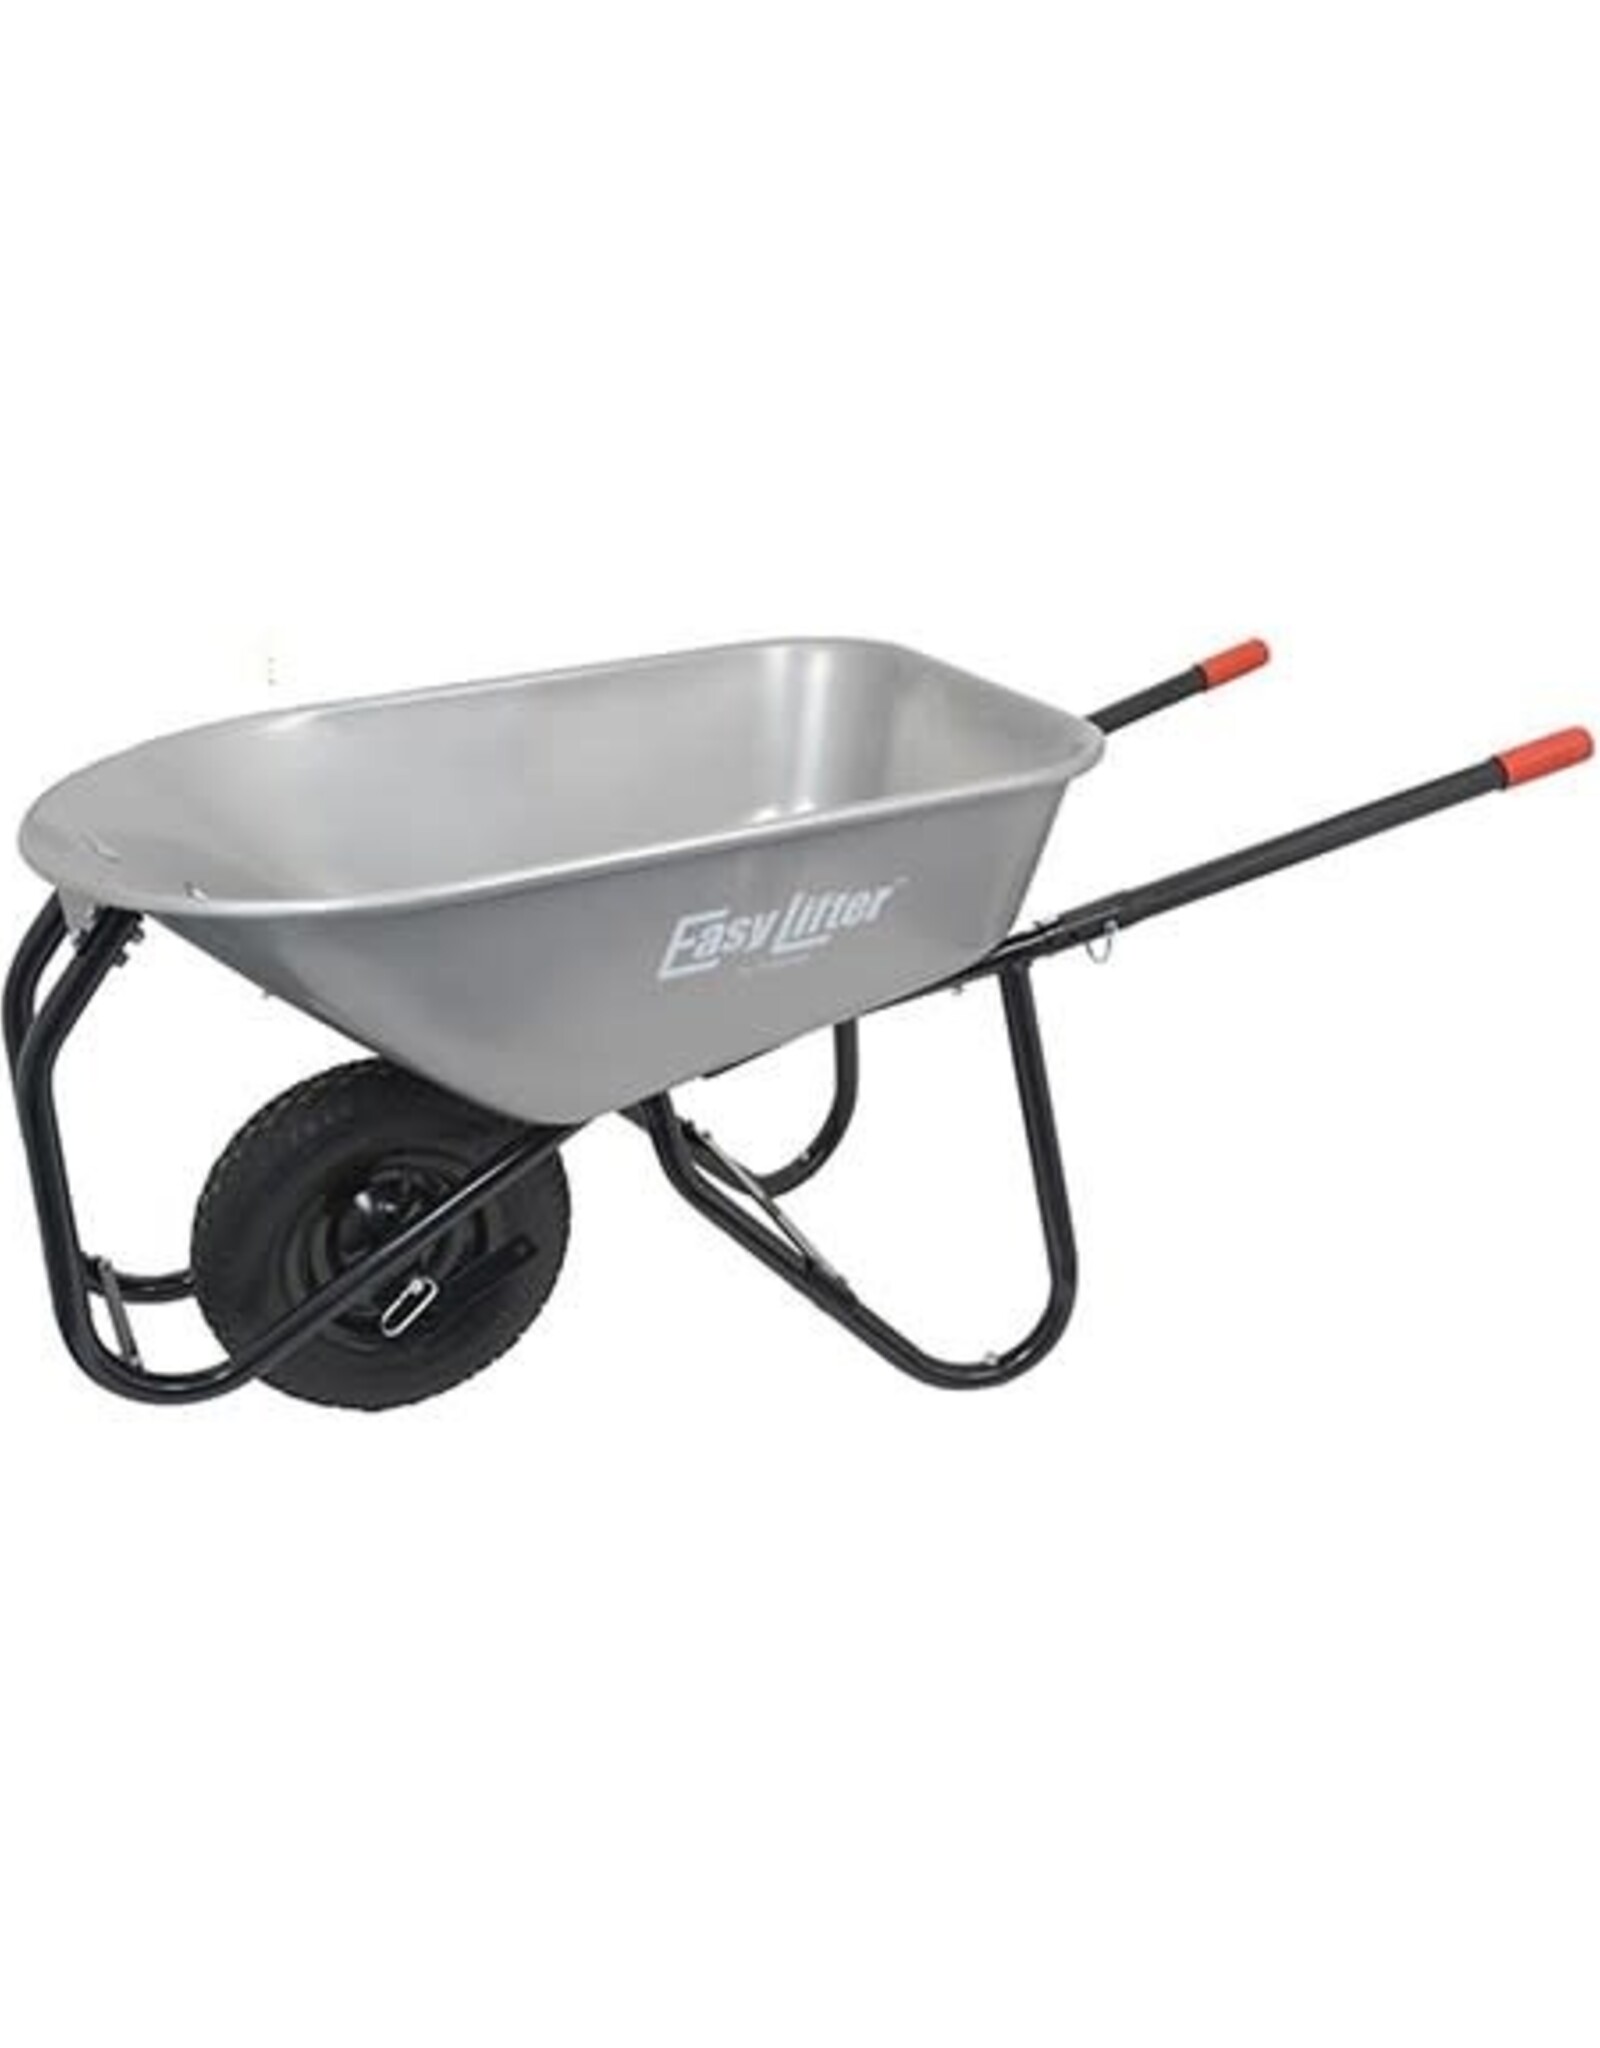 Corona Tools® EasyLIFTER® Wheelbarrow  - 6cu ft Capacity (store use only)